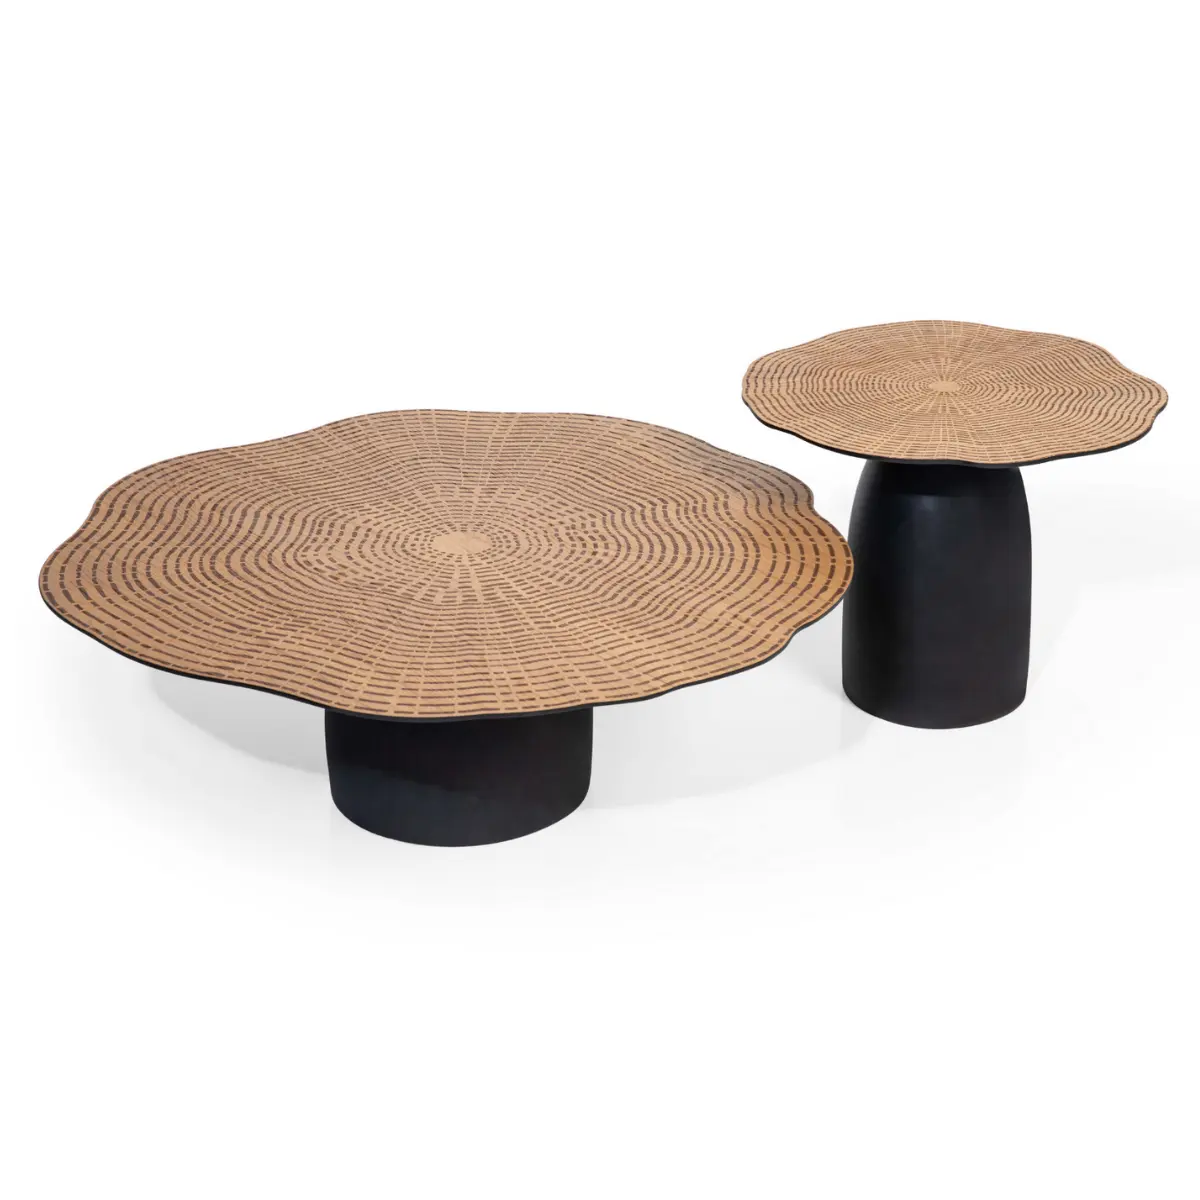 BEKALIVING Sorel Wooden Round Mushroom Coffee Tables Set of 2 For Living Room High Quality OEM Luxury Mid Century Modern Oak